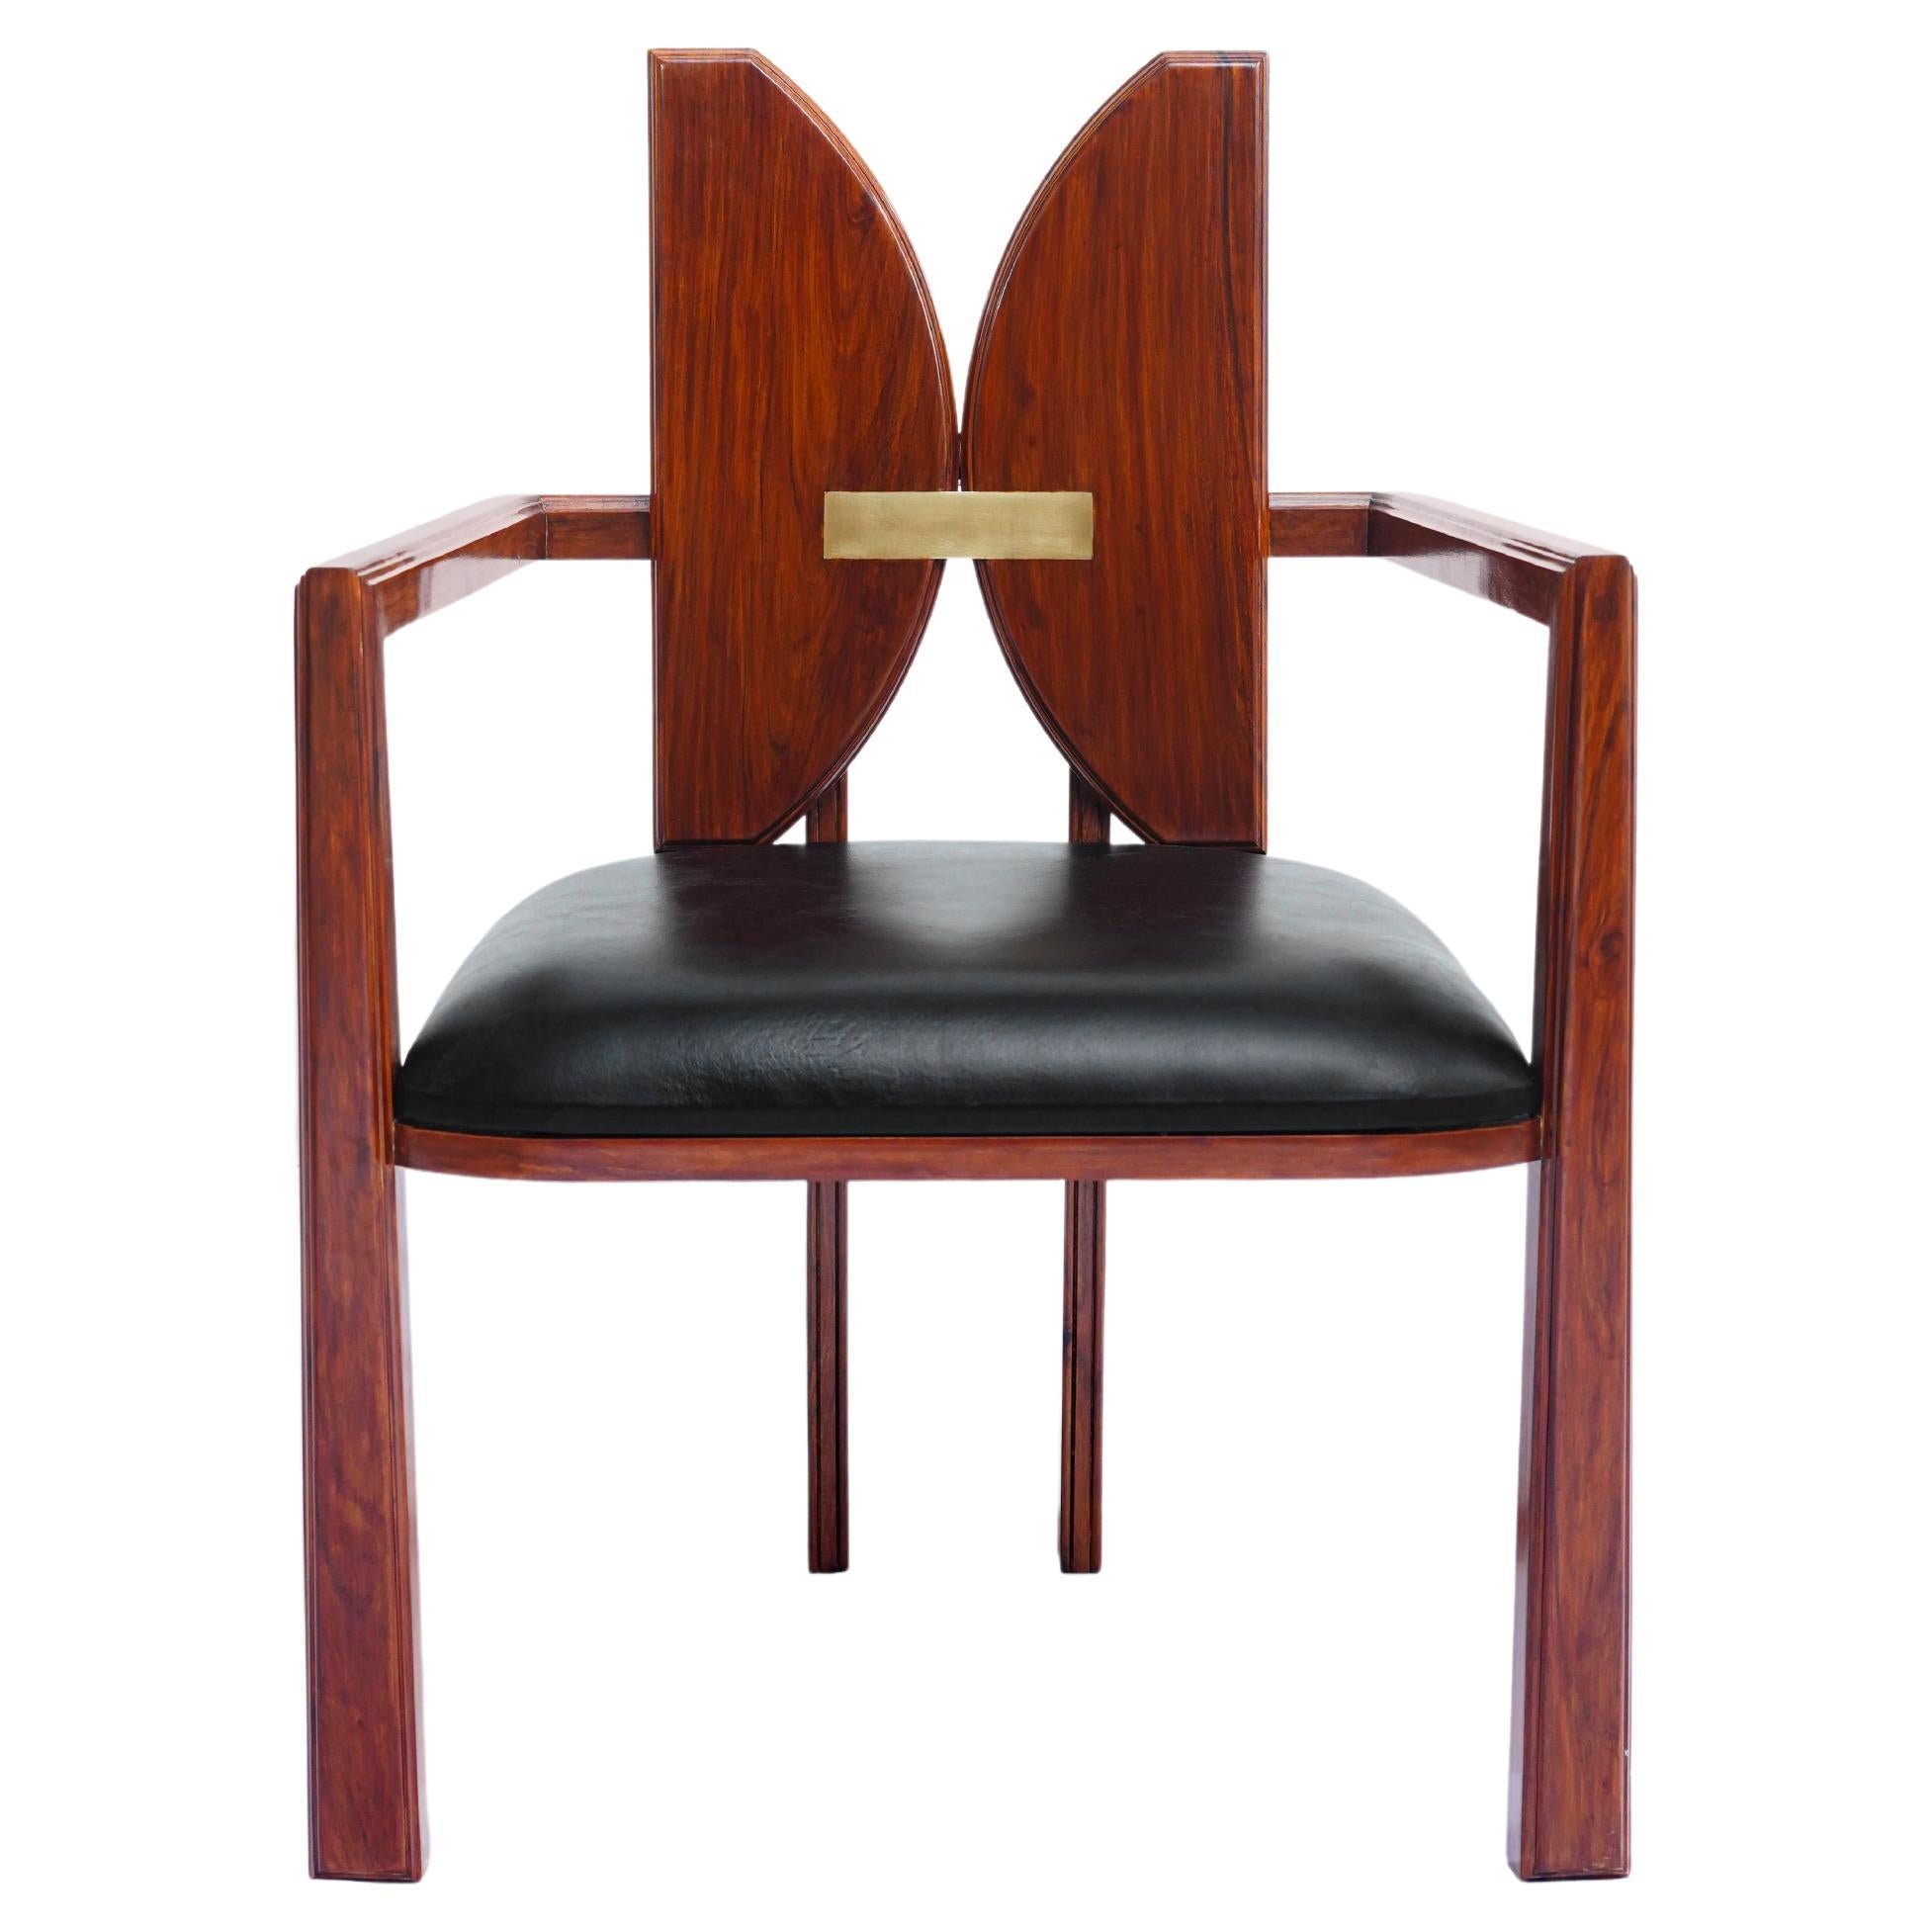 original, Geometric, transitional style, art nouveau, bold, modern dining chair